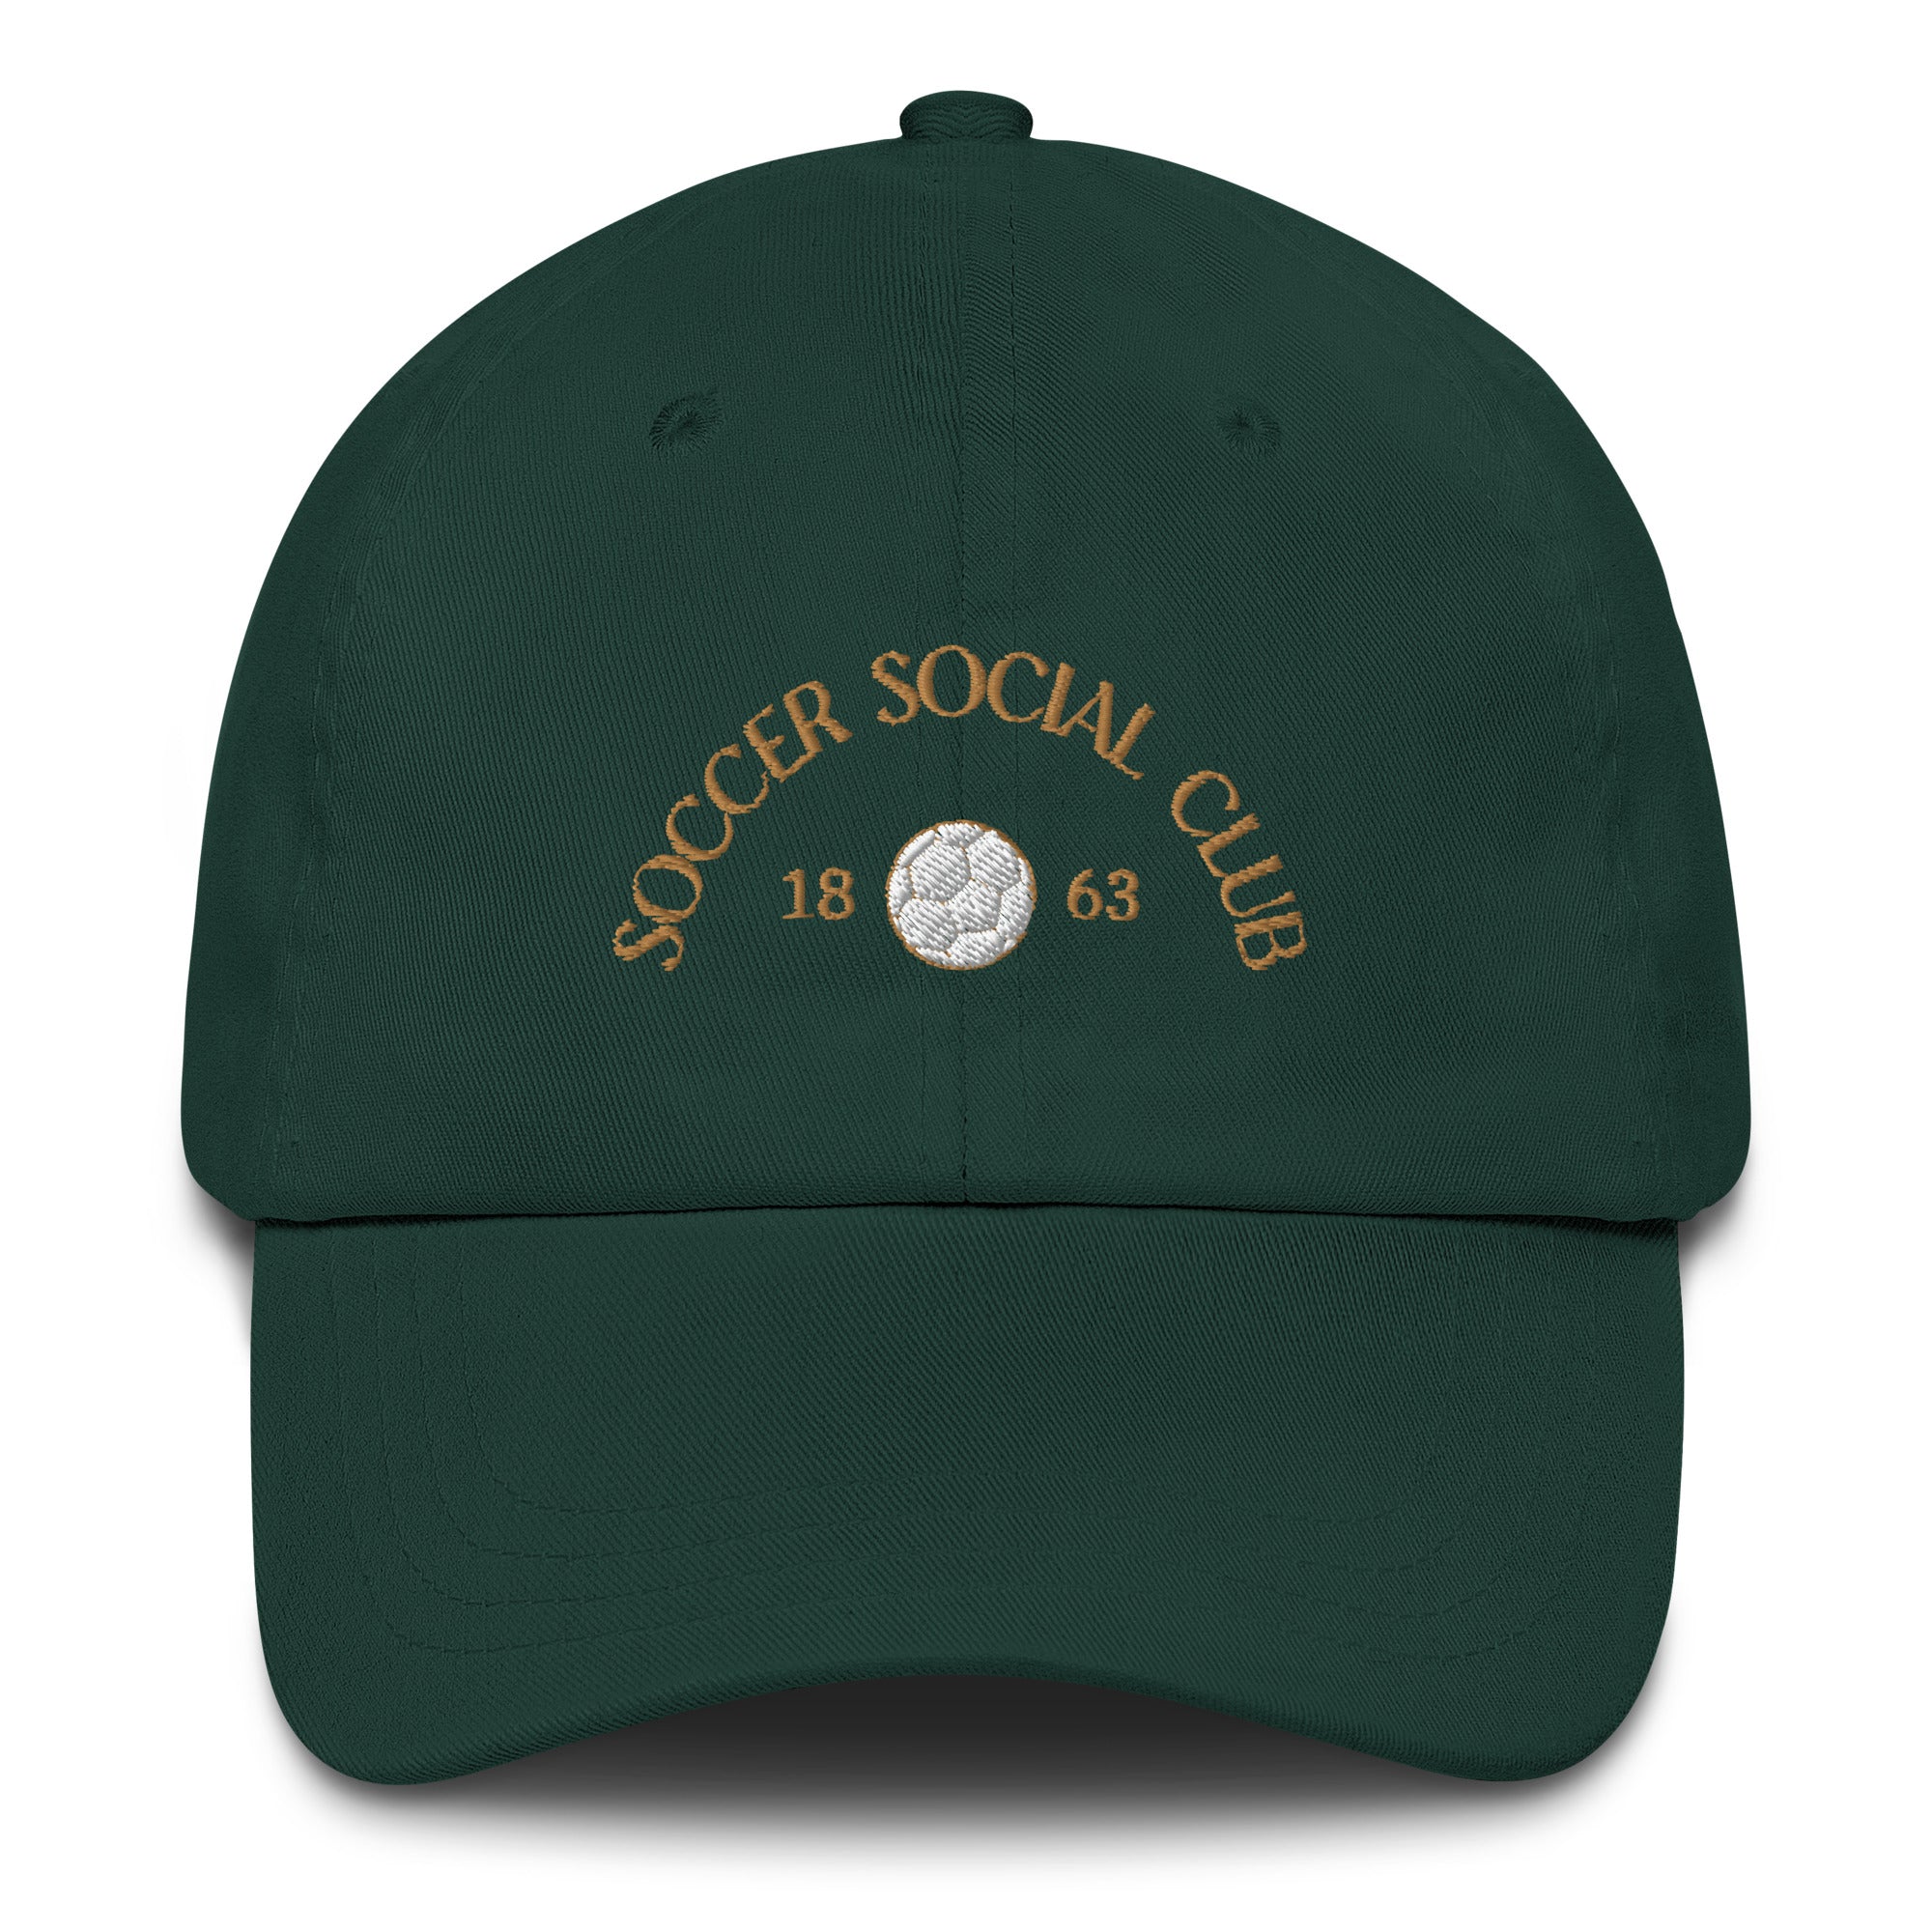 Soccer Social Club - Cap